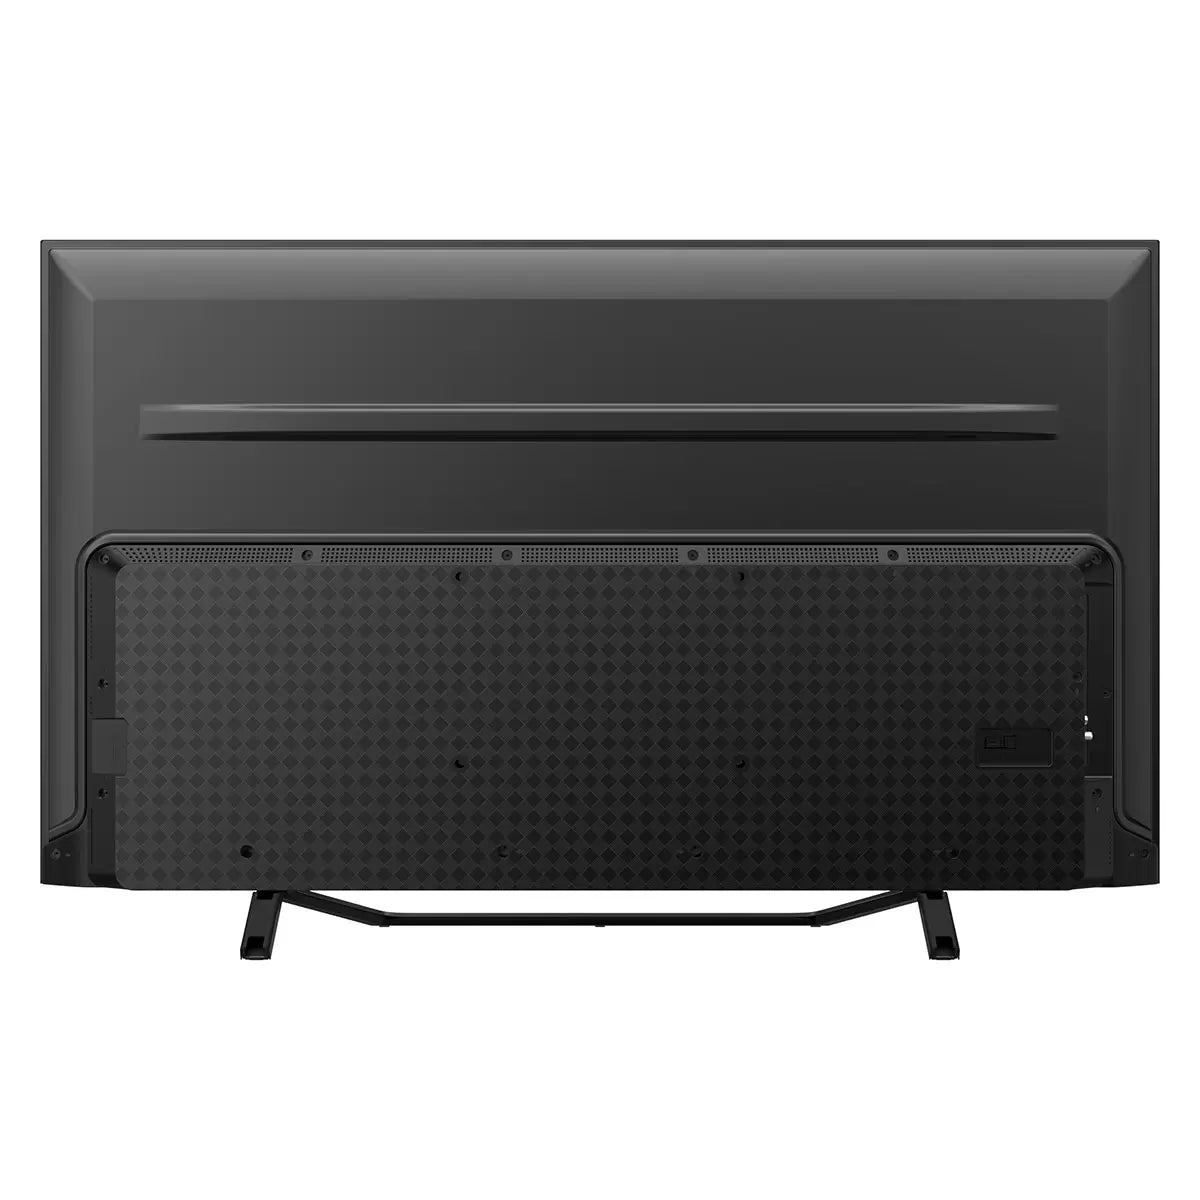 Hisense 43A6K 4K UHD Smart TV, 43″, Black - Worldshop